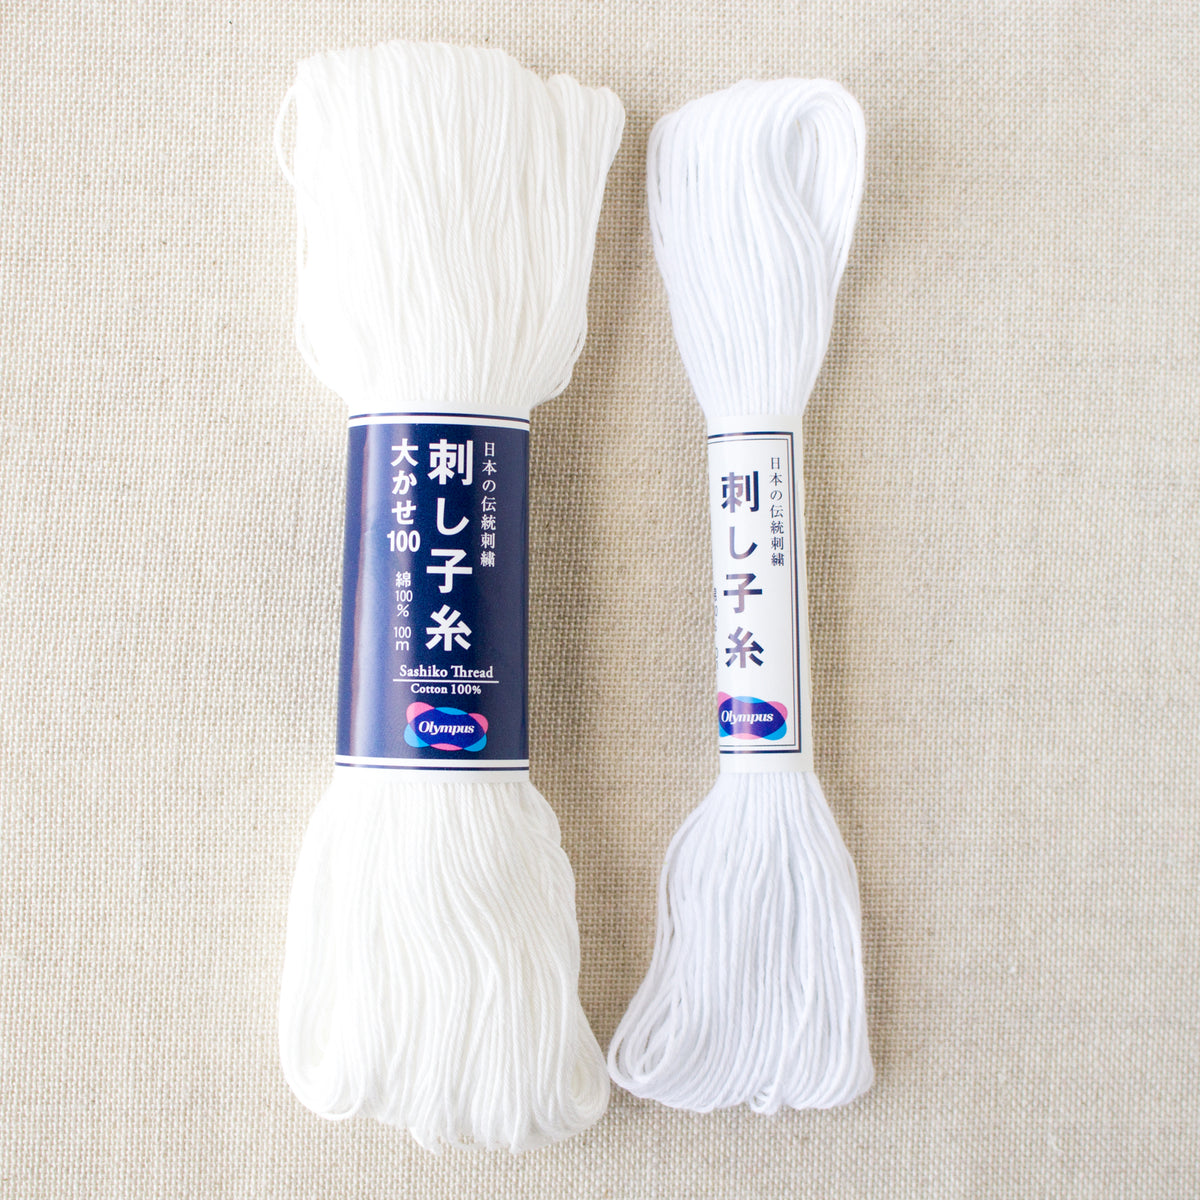 Japanese Sashiko Thread - Large Skeins